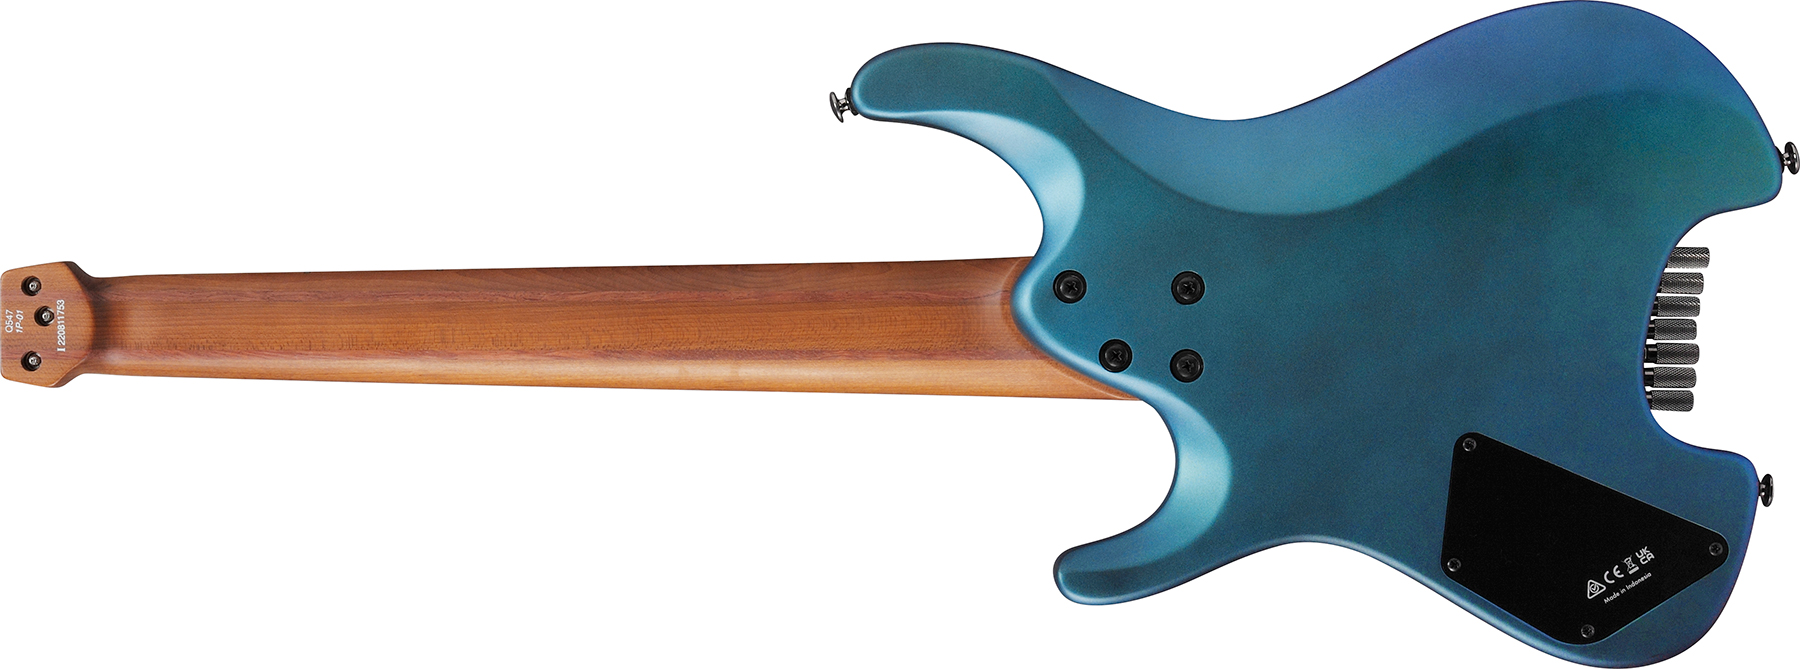 Ibanez Q547 Bmm Quest 7c Hss Ht Mn - Blue Chameleon Metallic Matte - 7-snarige elektrische gitaar - Variation 1